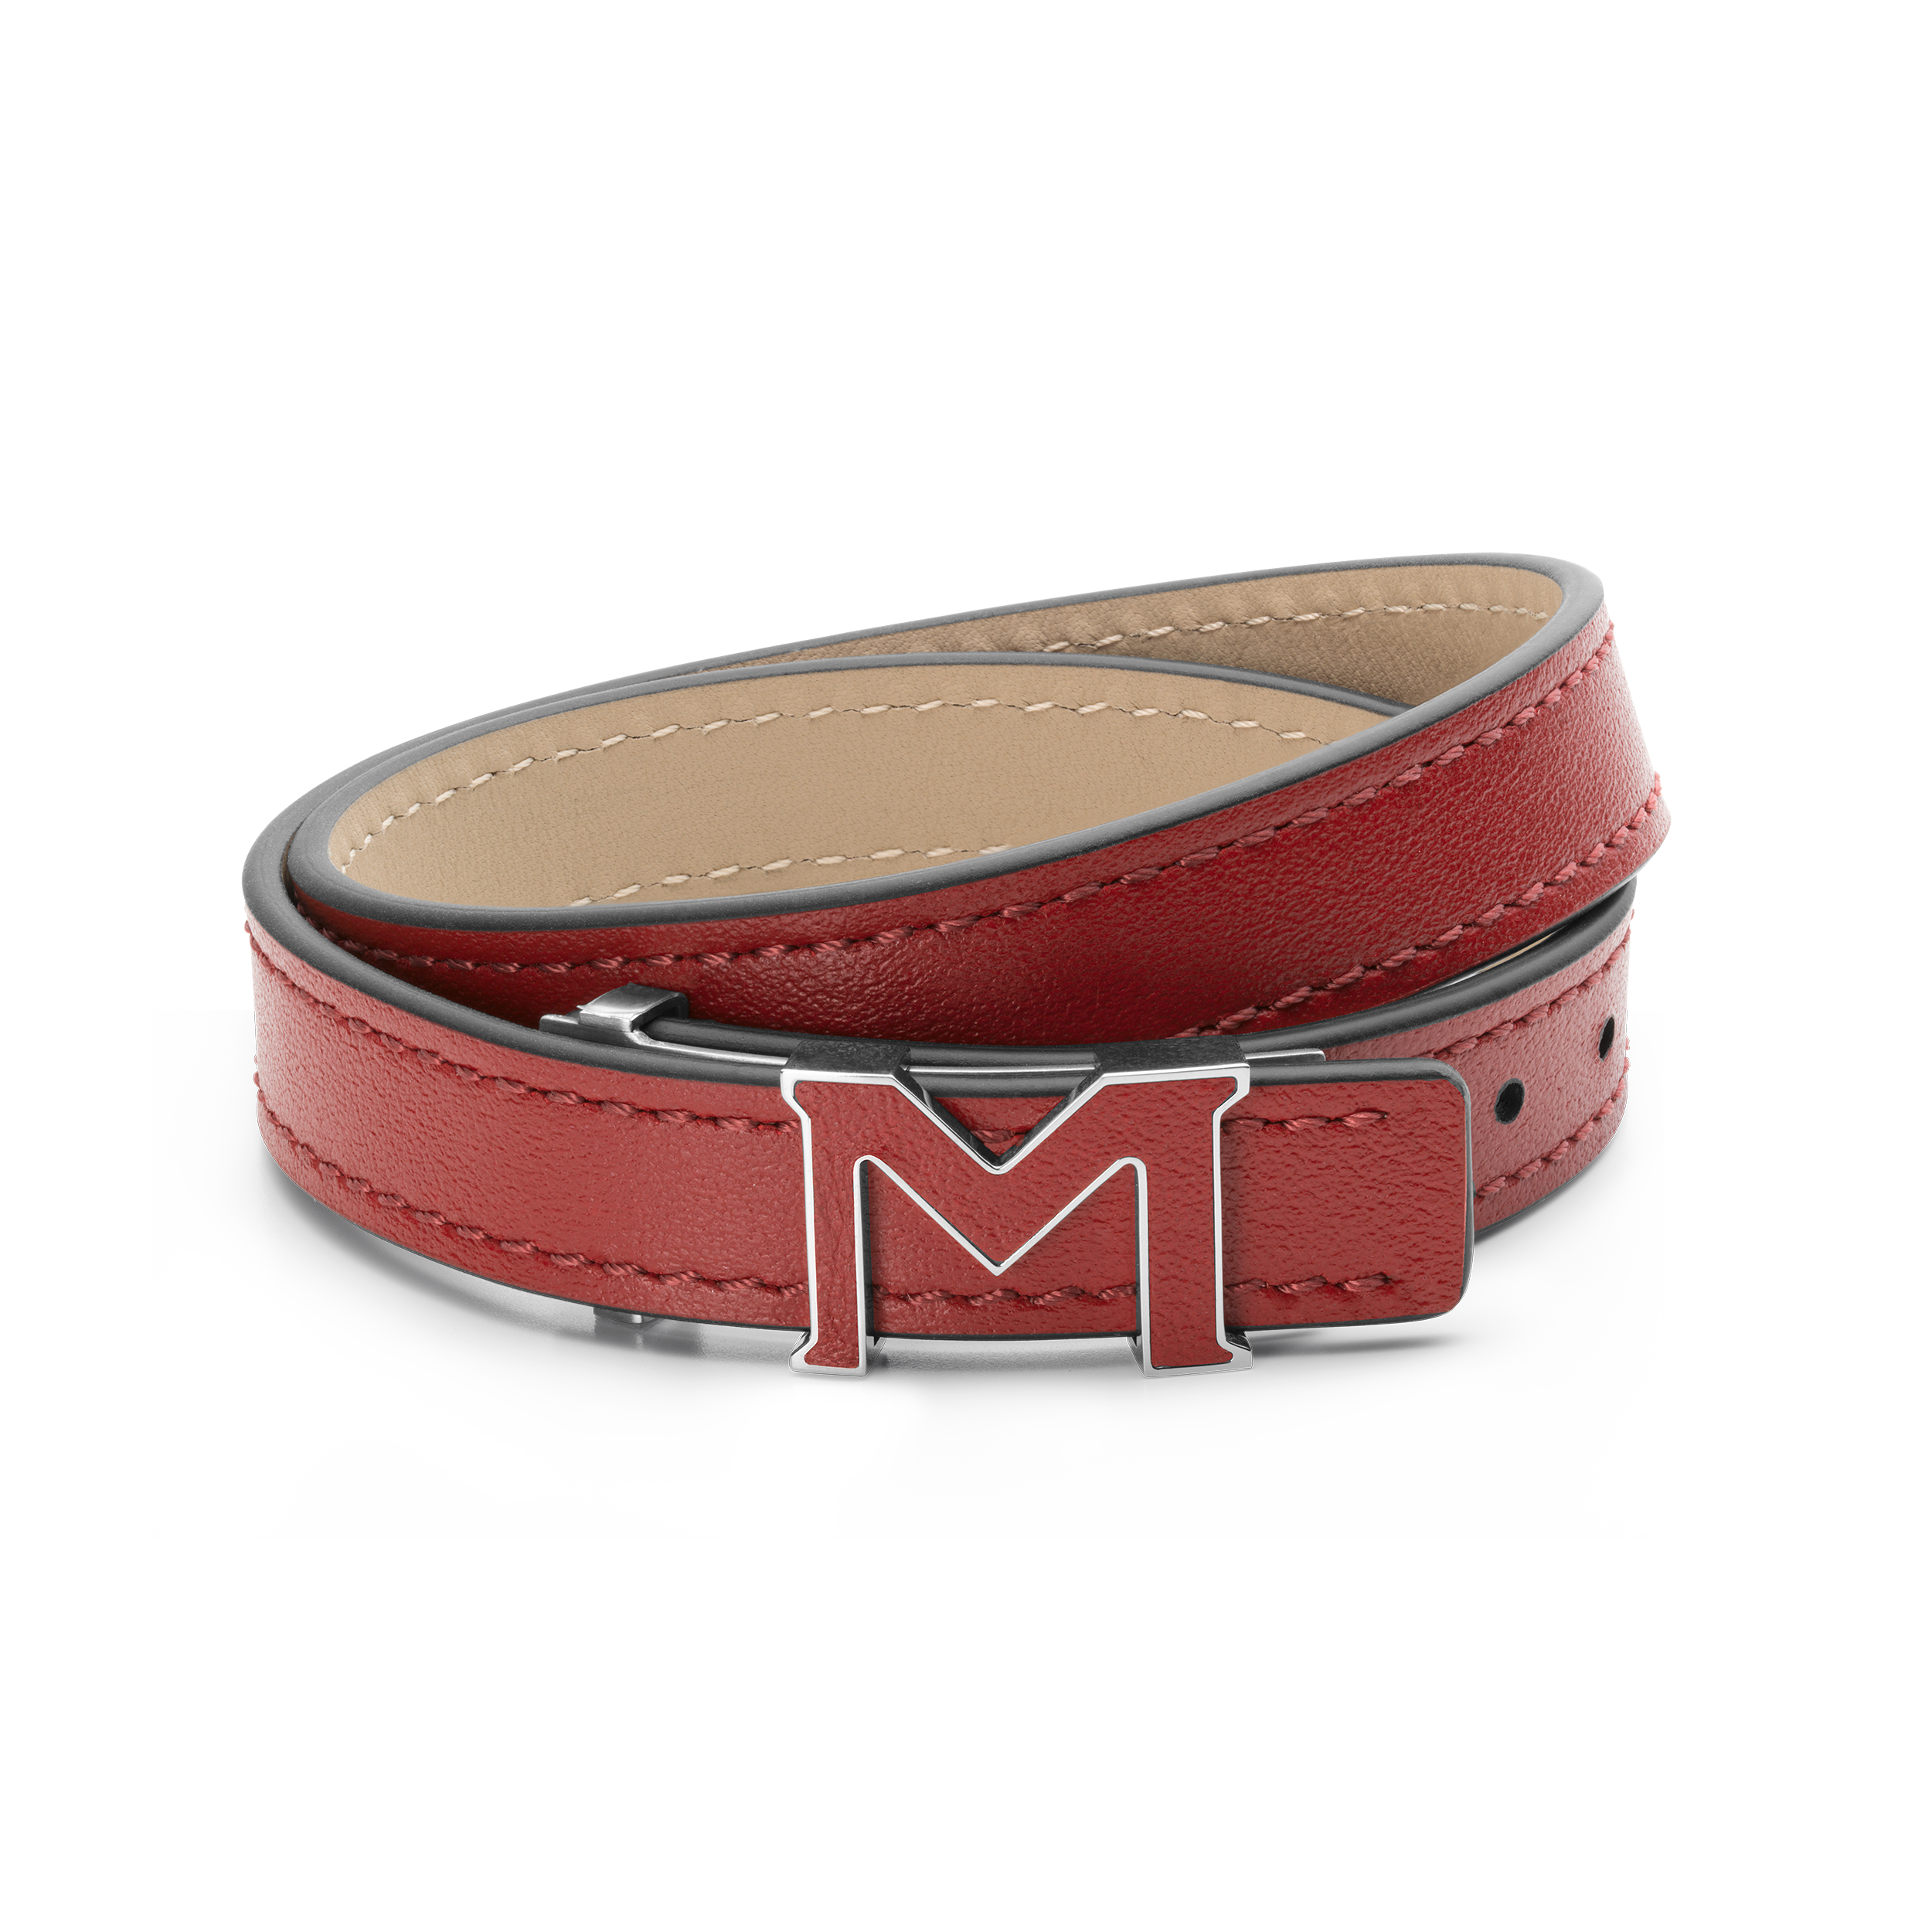 Bracelet Montblanc M Logo red, image 2